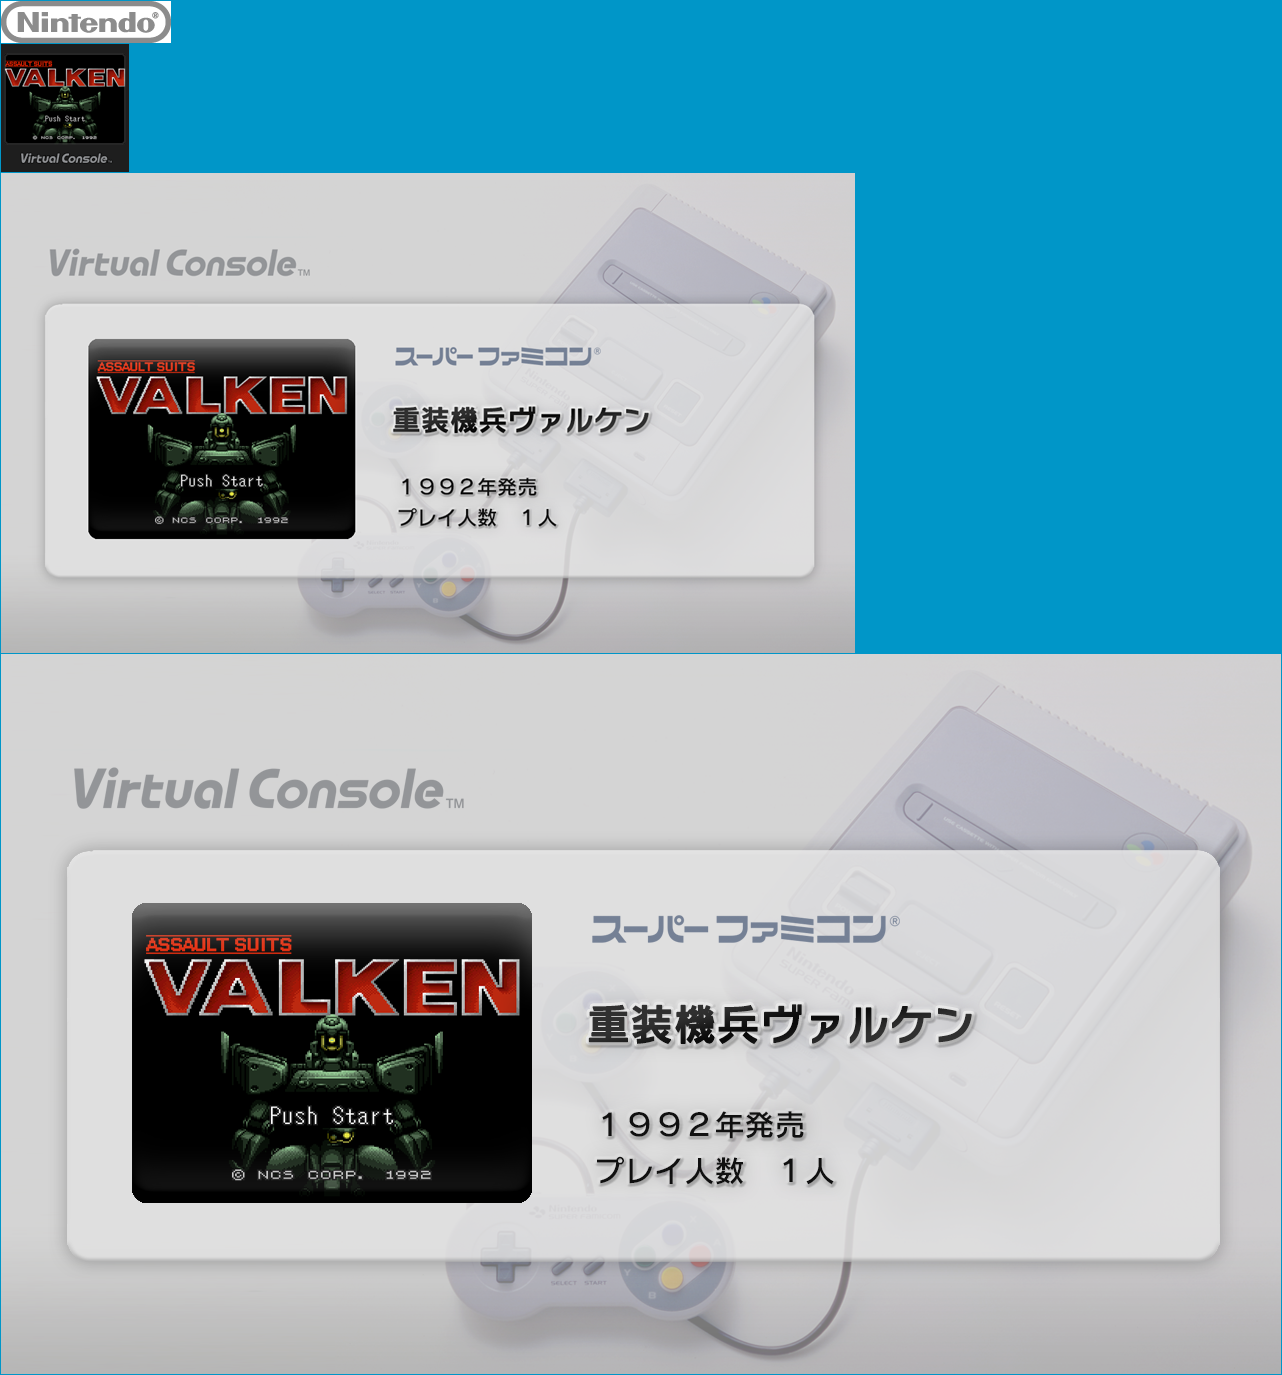 Virtual Console - Jūsō Kihei Valken